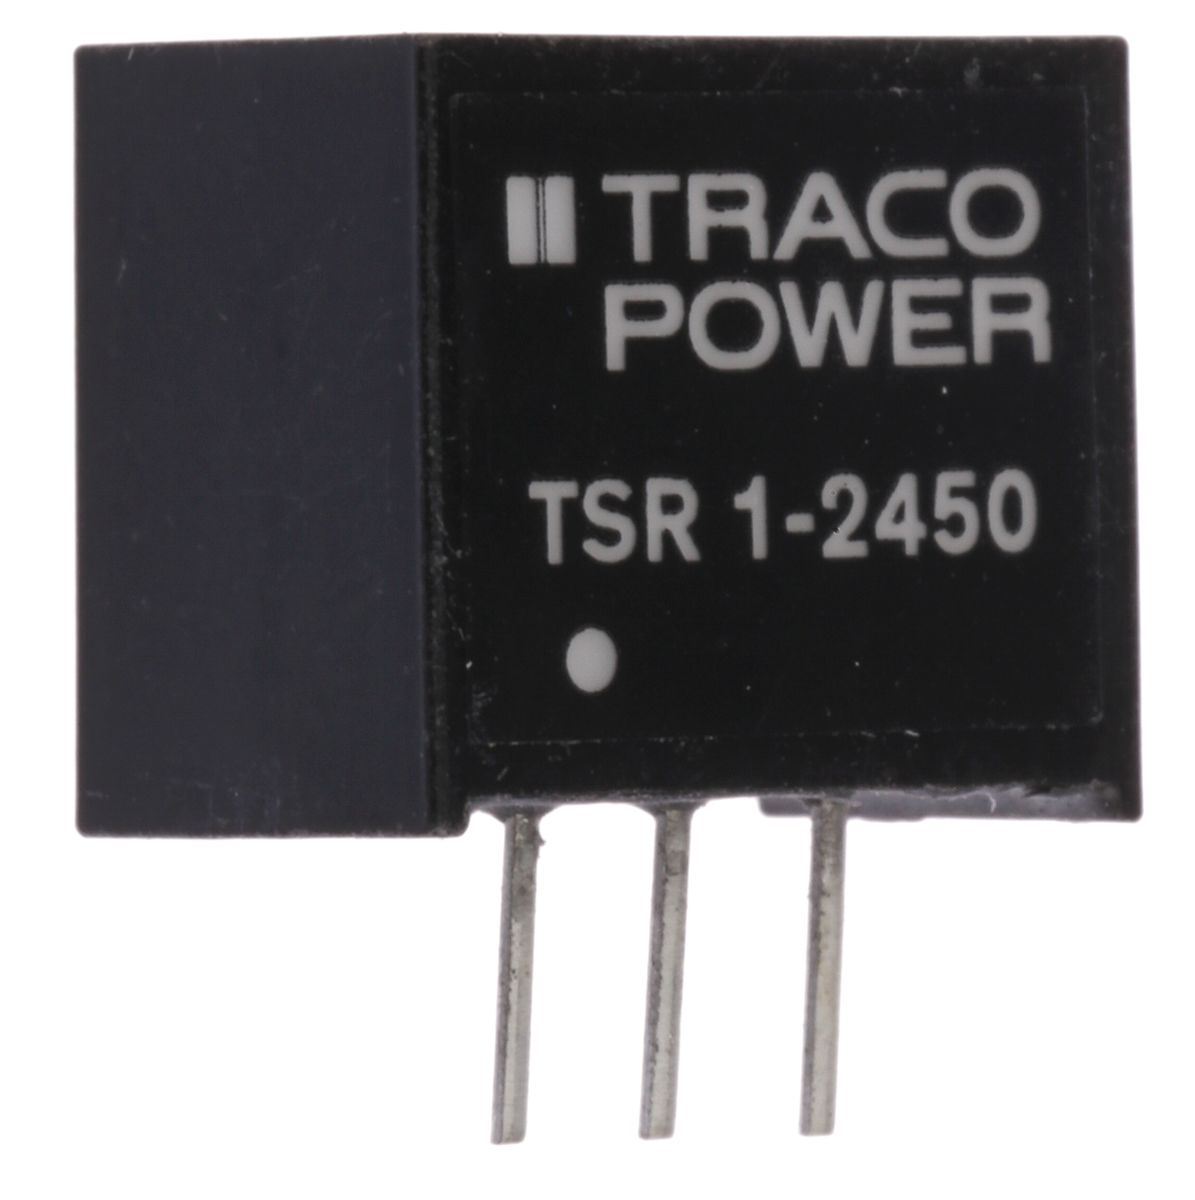 TRACOPOWER Switching Regulator, Through Hole, 5V dc Output Voltage, 6.5 → 36V dc Input Voltage, 1A Output